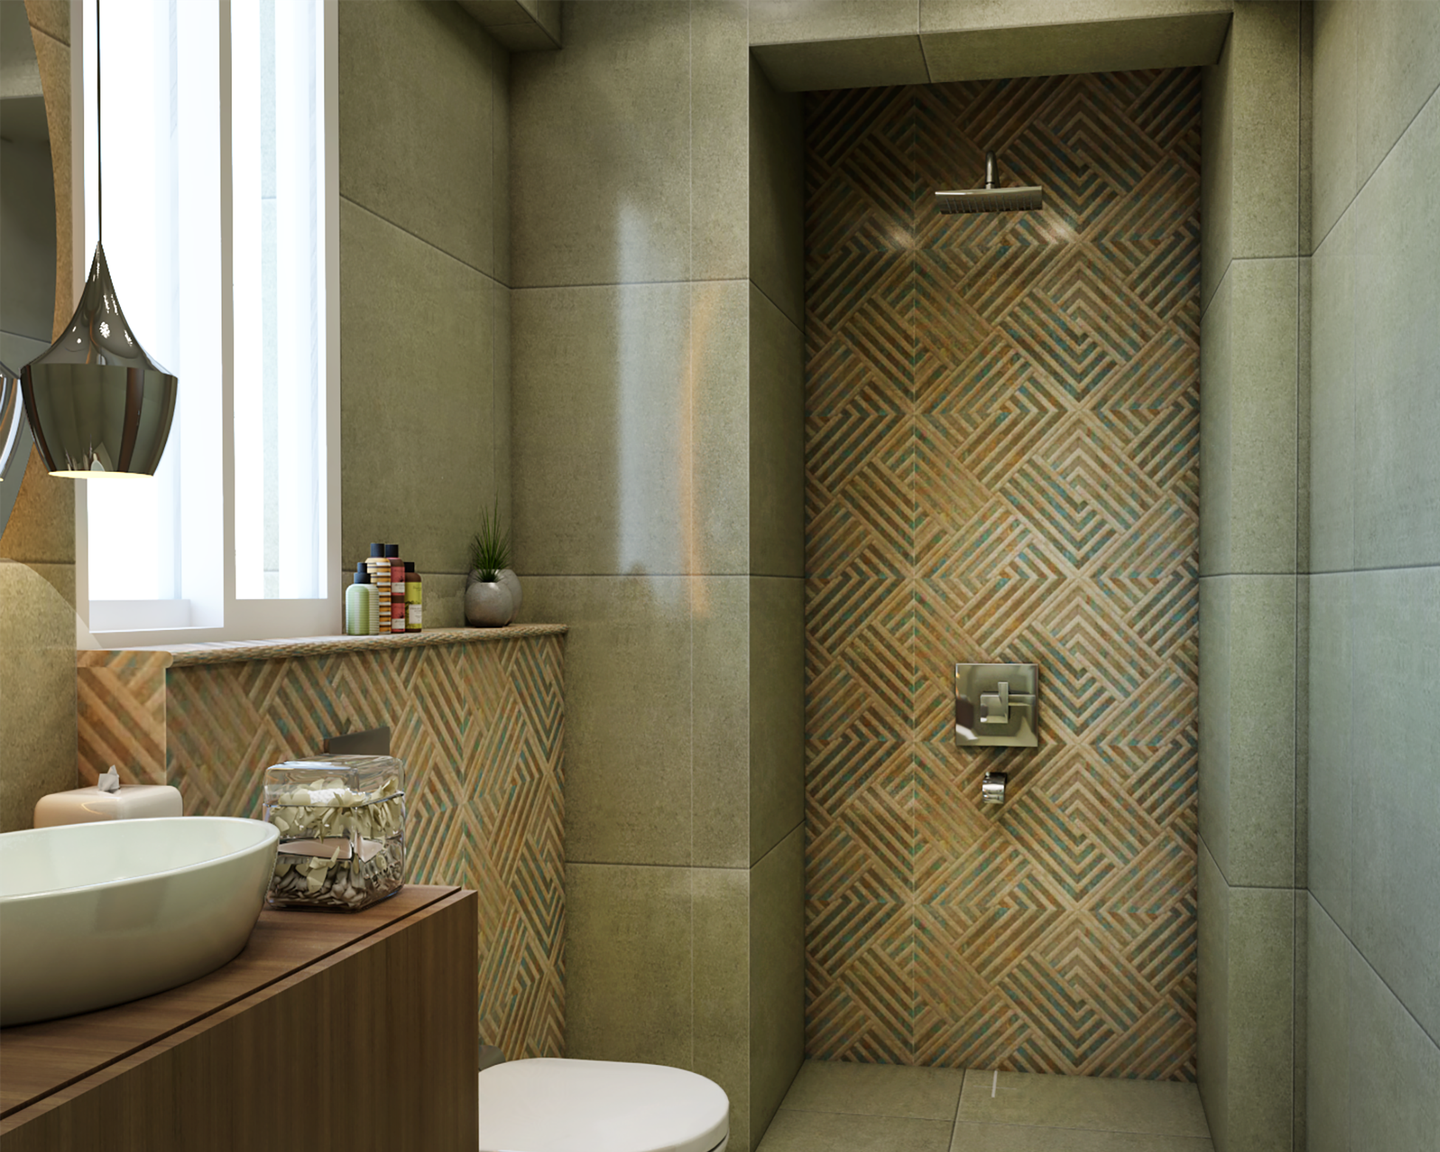 Modern Bathroom Tile Design With An Earthy Palette